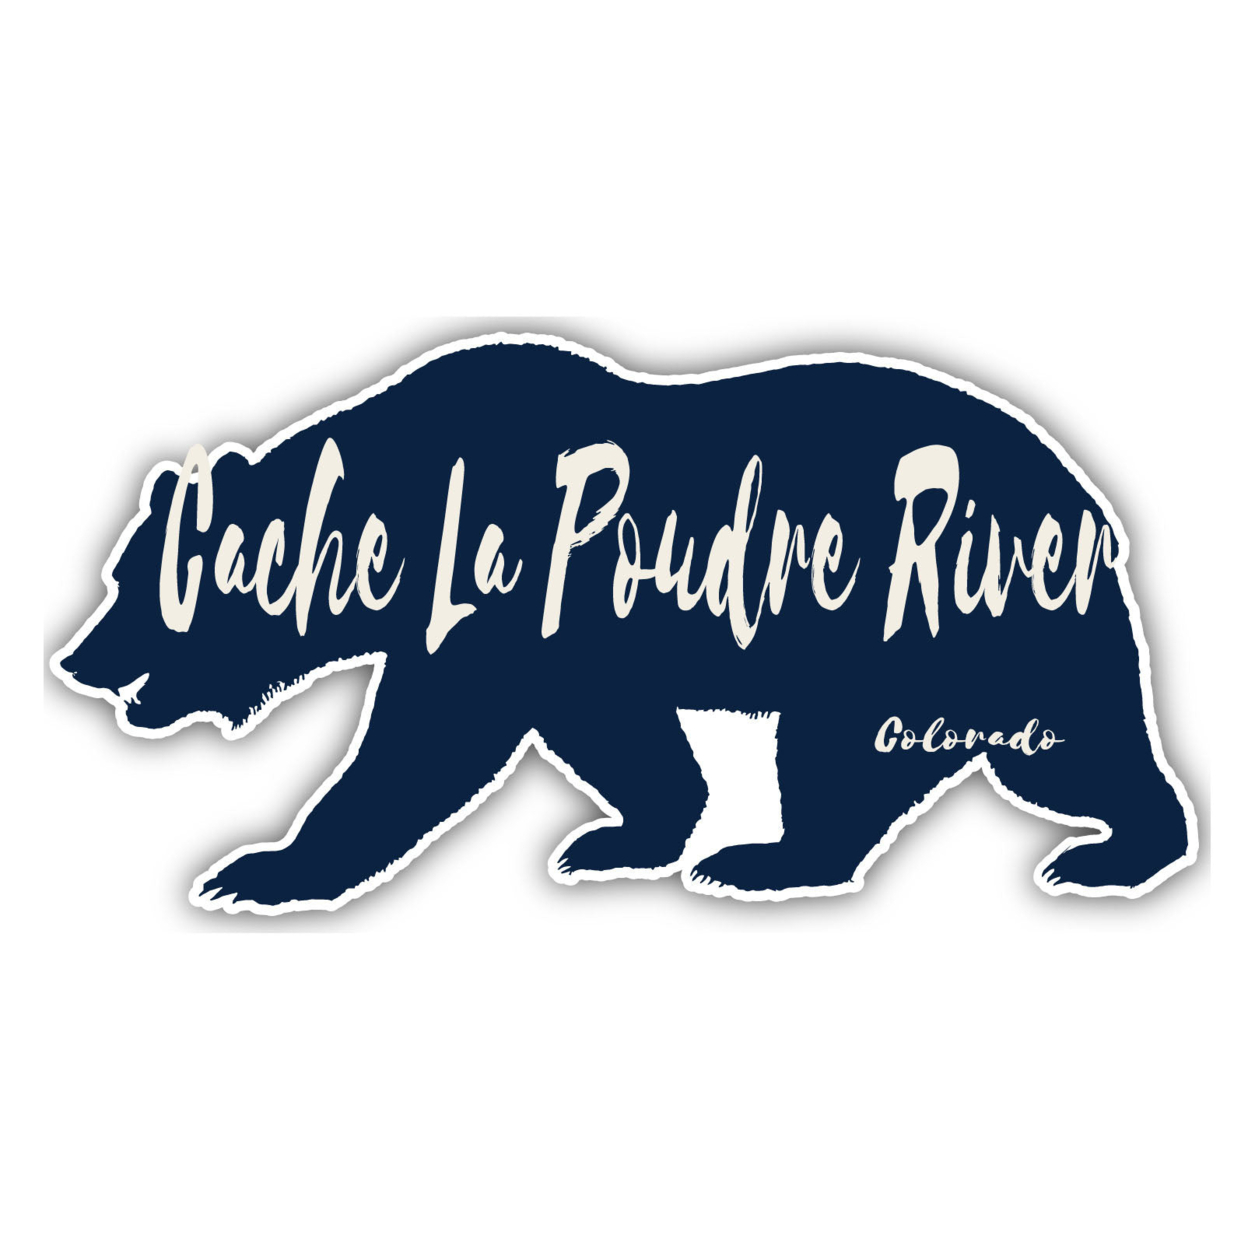 Cache La Poudre River Colorado Souvenir Decorative Stickers (Choose Theme And Size) - 4-Pack, 8-Inch, Tent